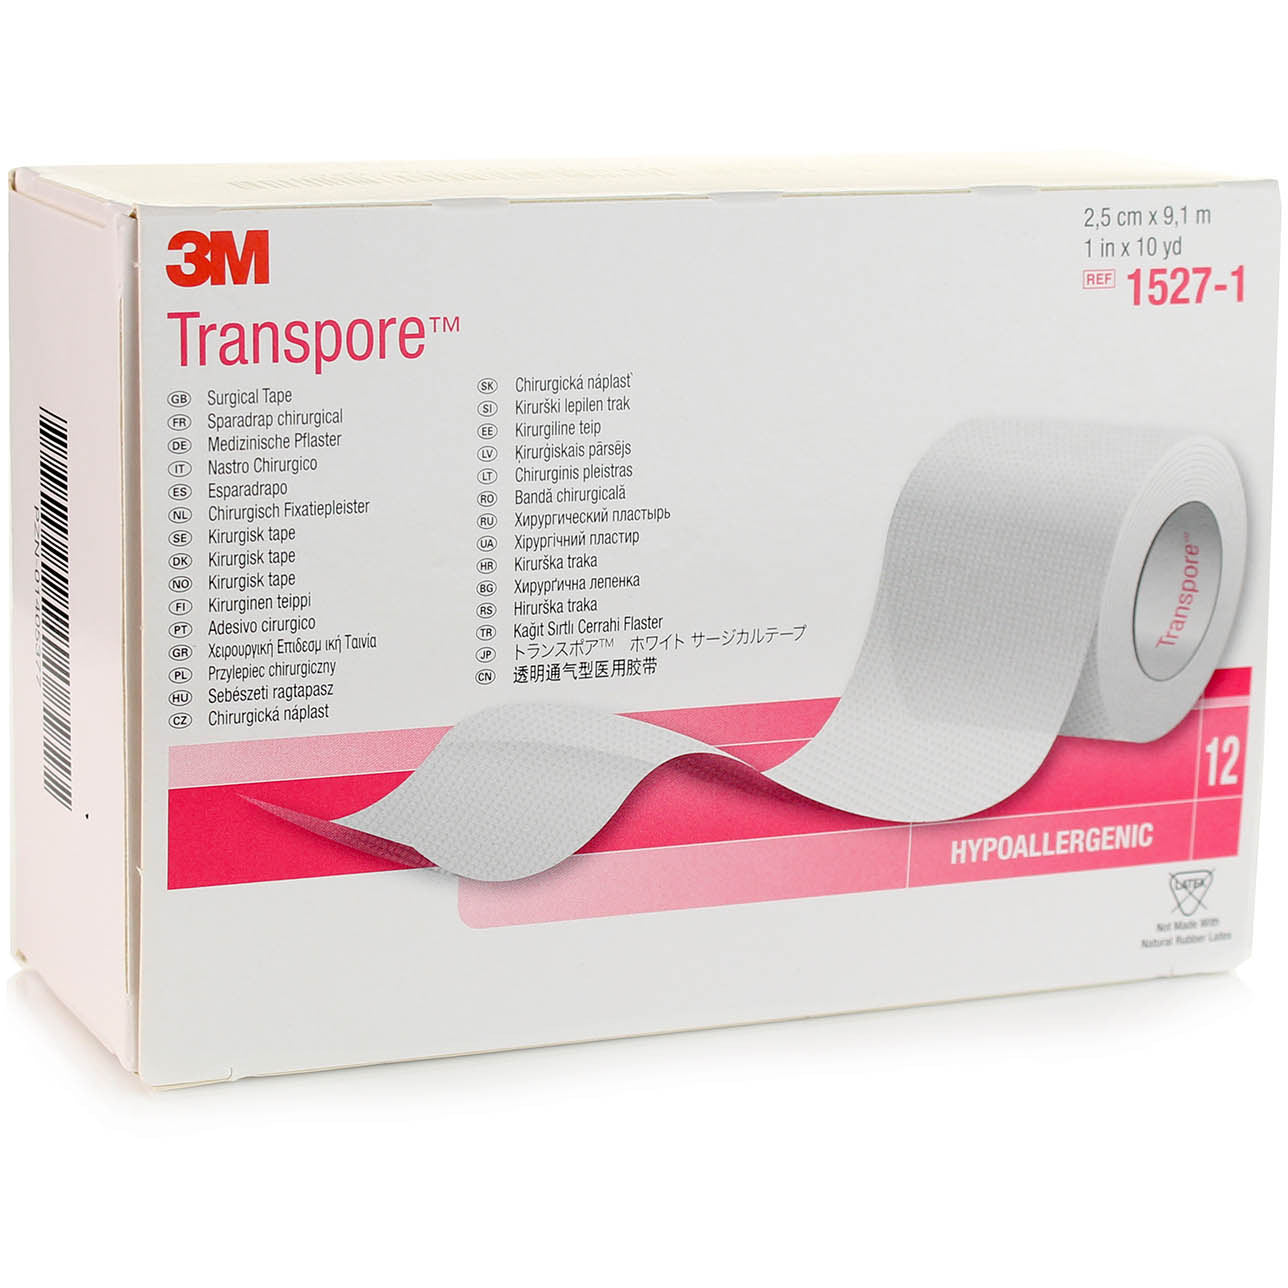 3M Transpore Surgical Tape 2.5cm x 9.14m - SINGLE